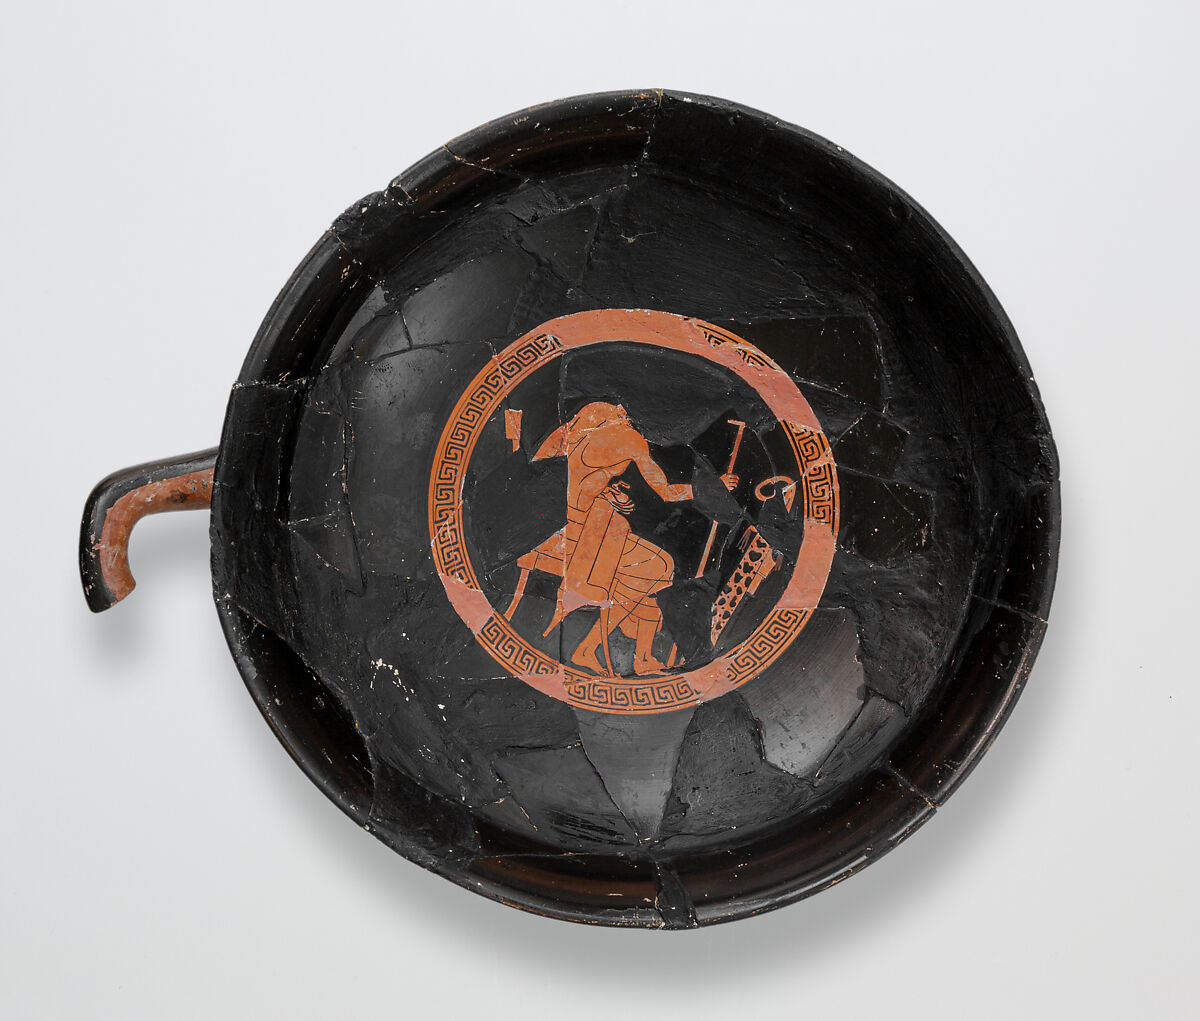 Kylix fragment, Attributed to Makron, Terracotta, Greek, Attic 